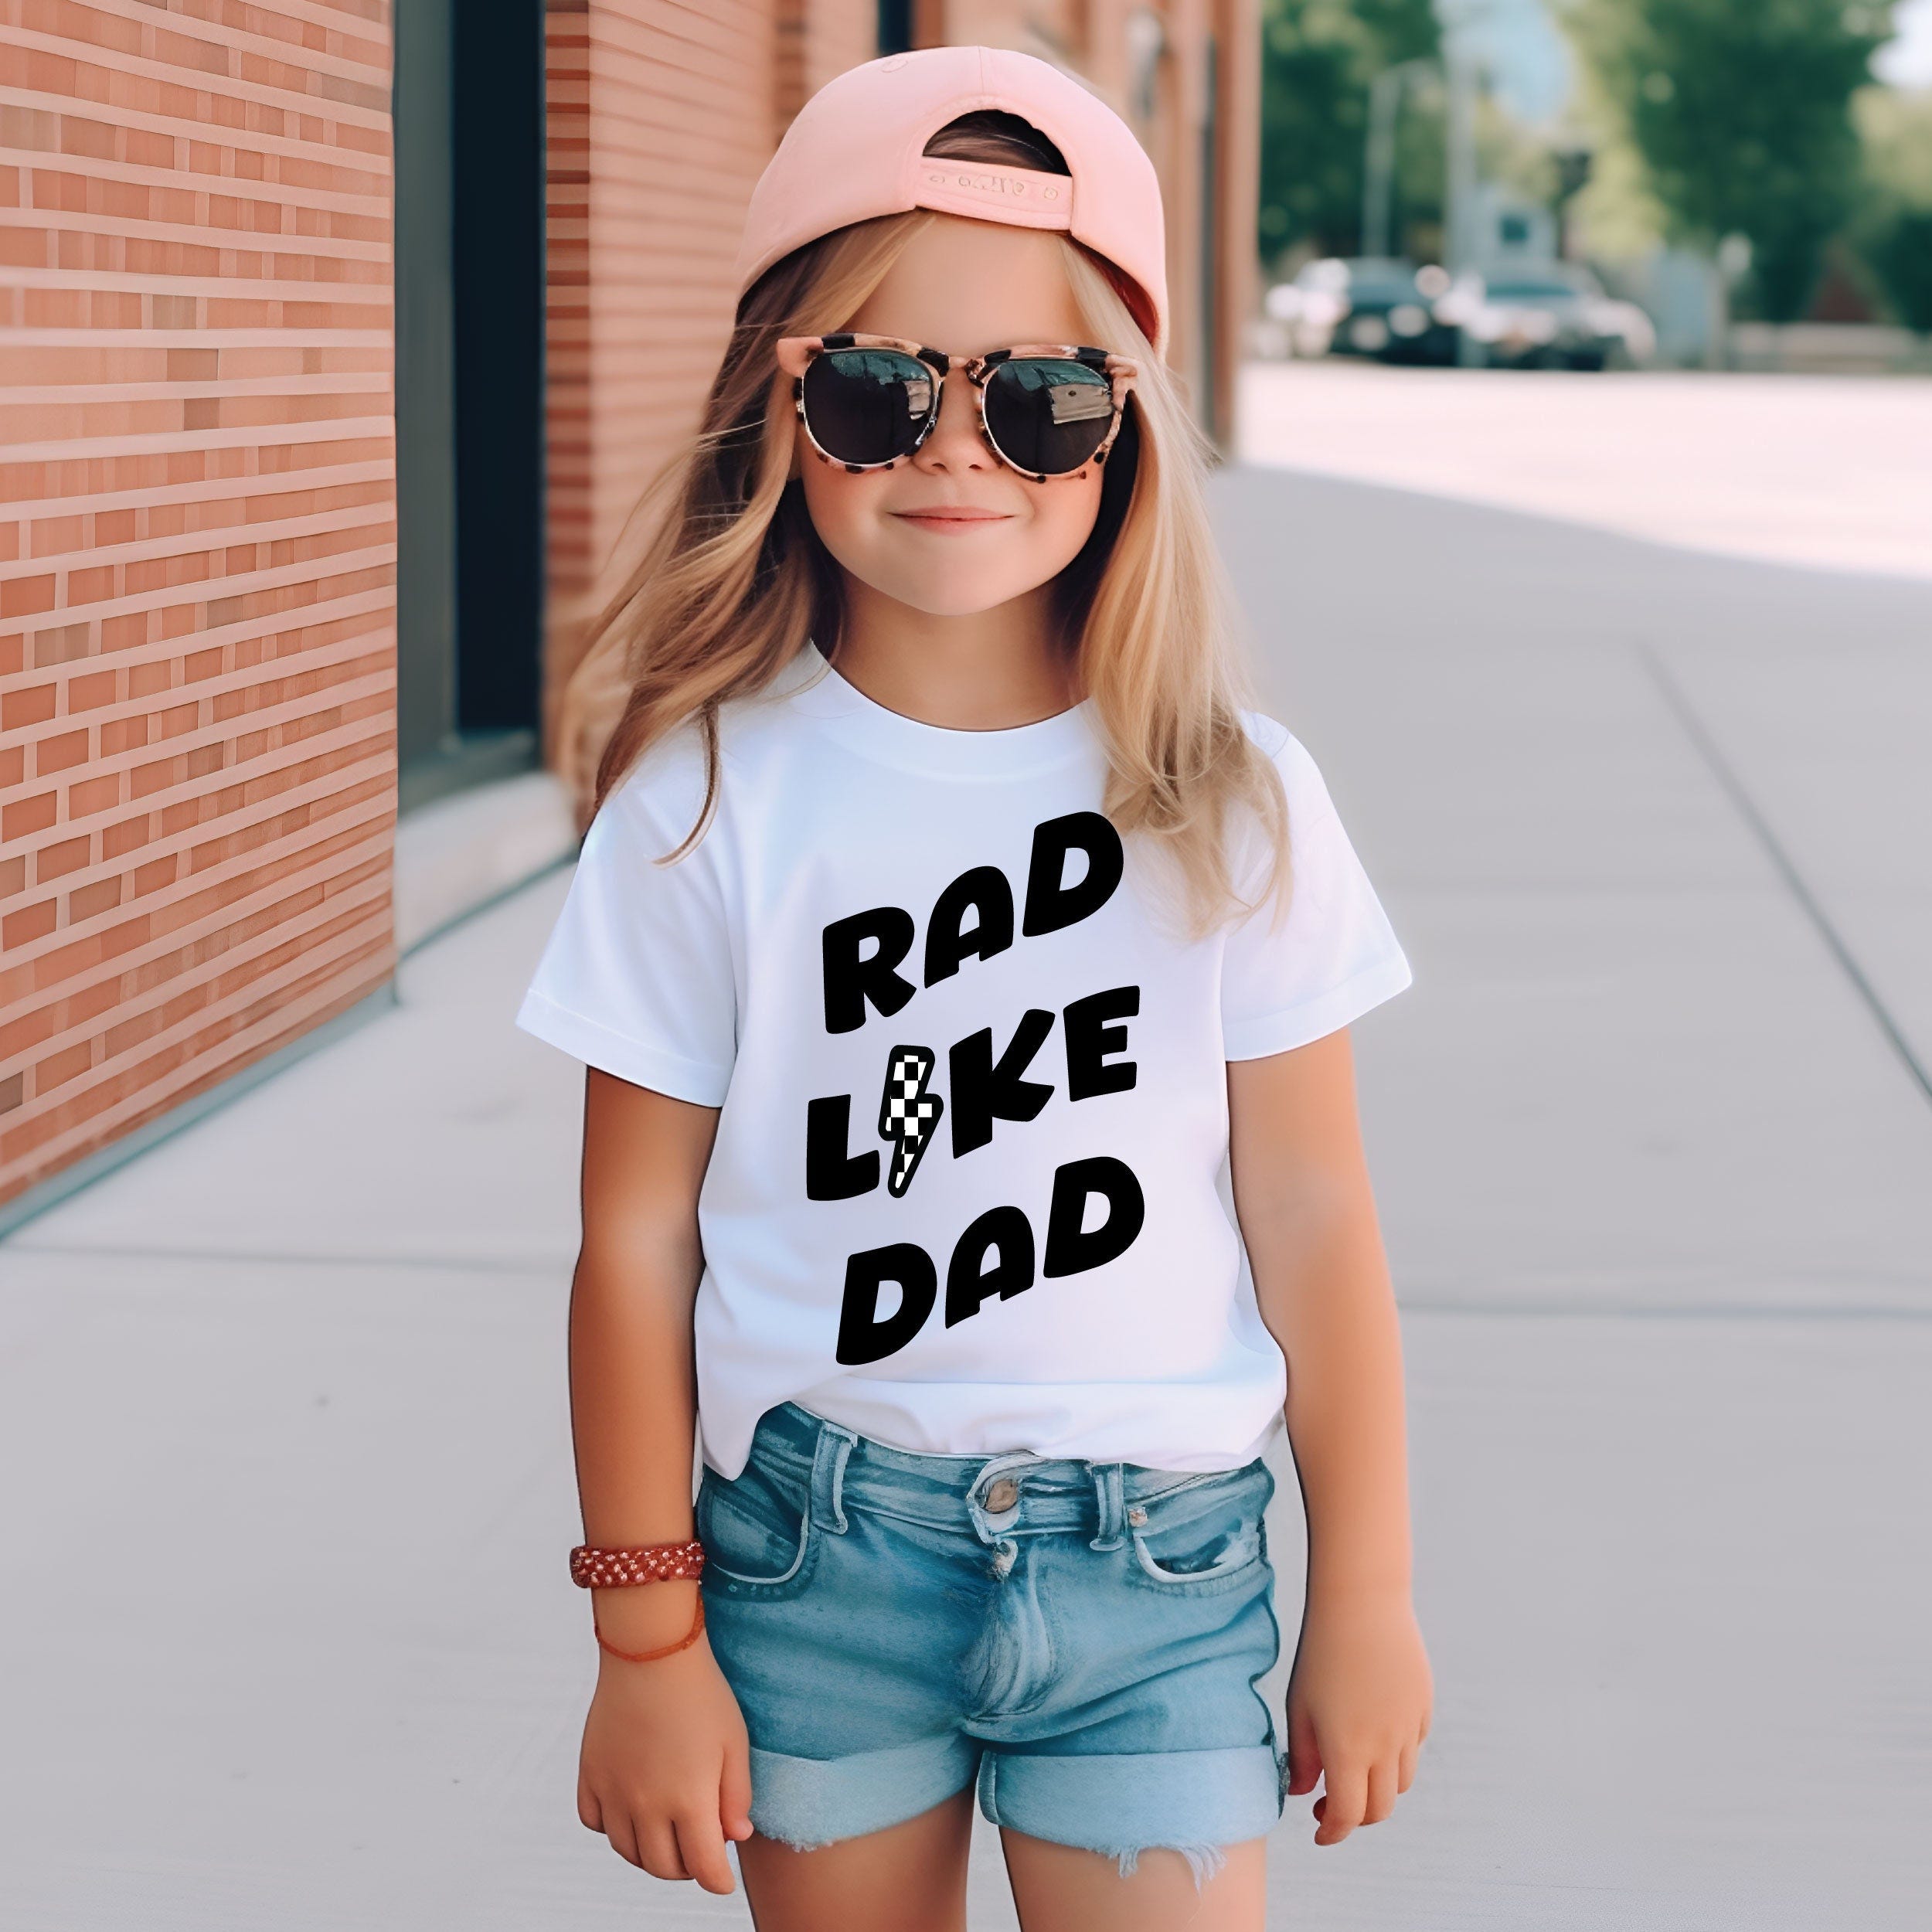 Rad Like Dad - Rad Like Dad Shirt - Father